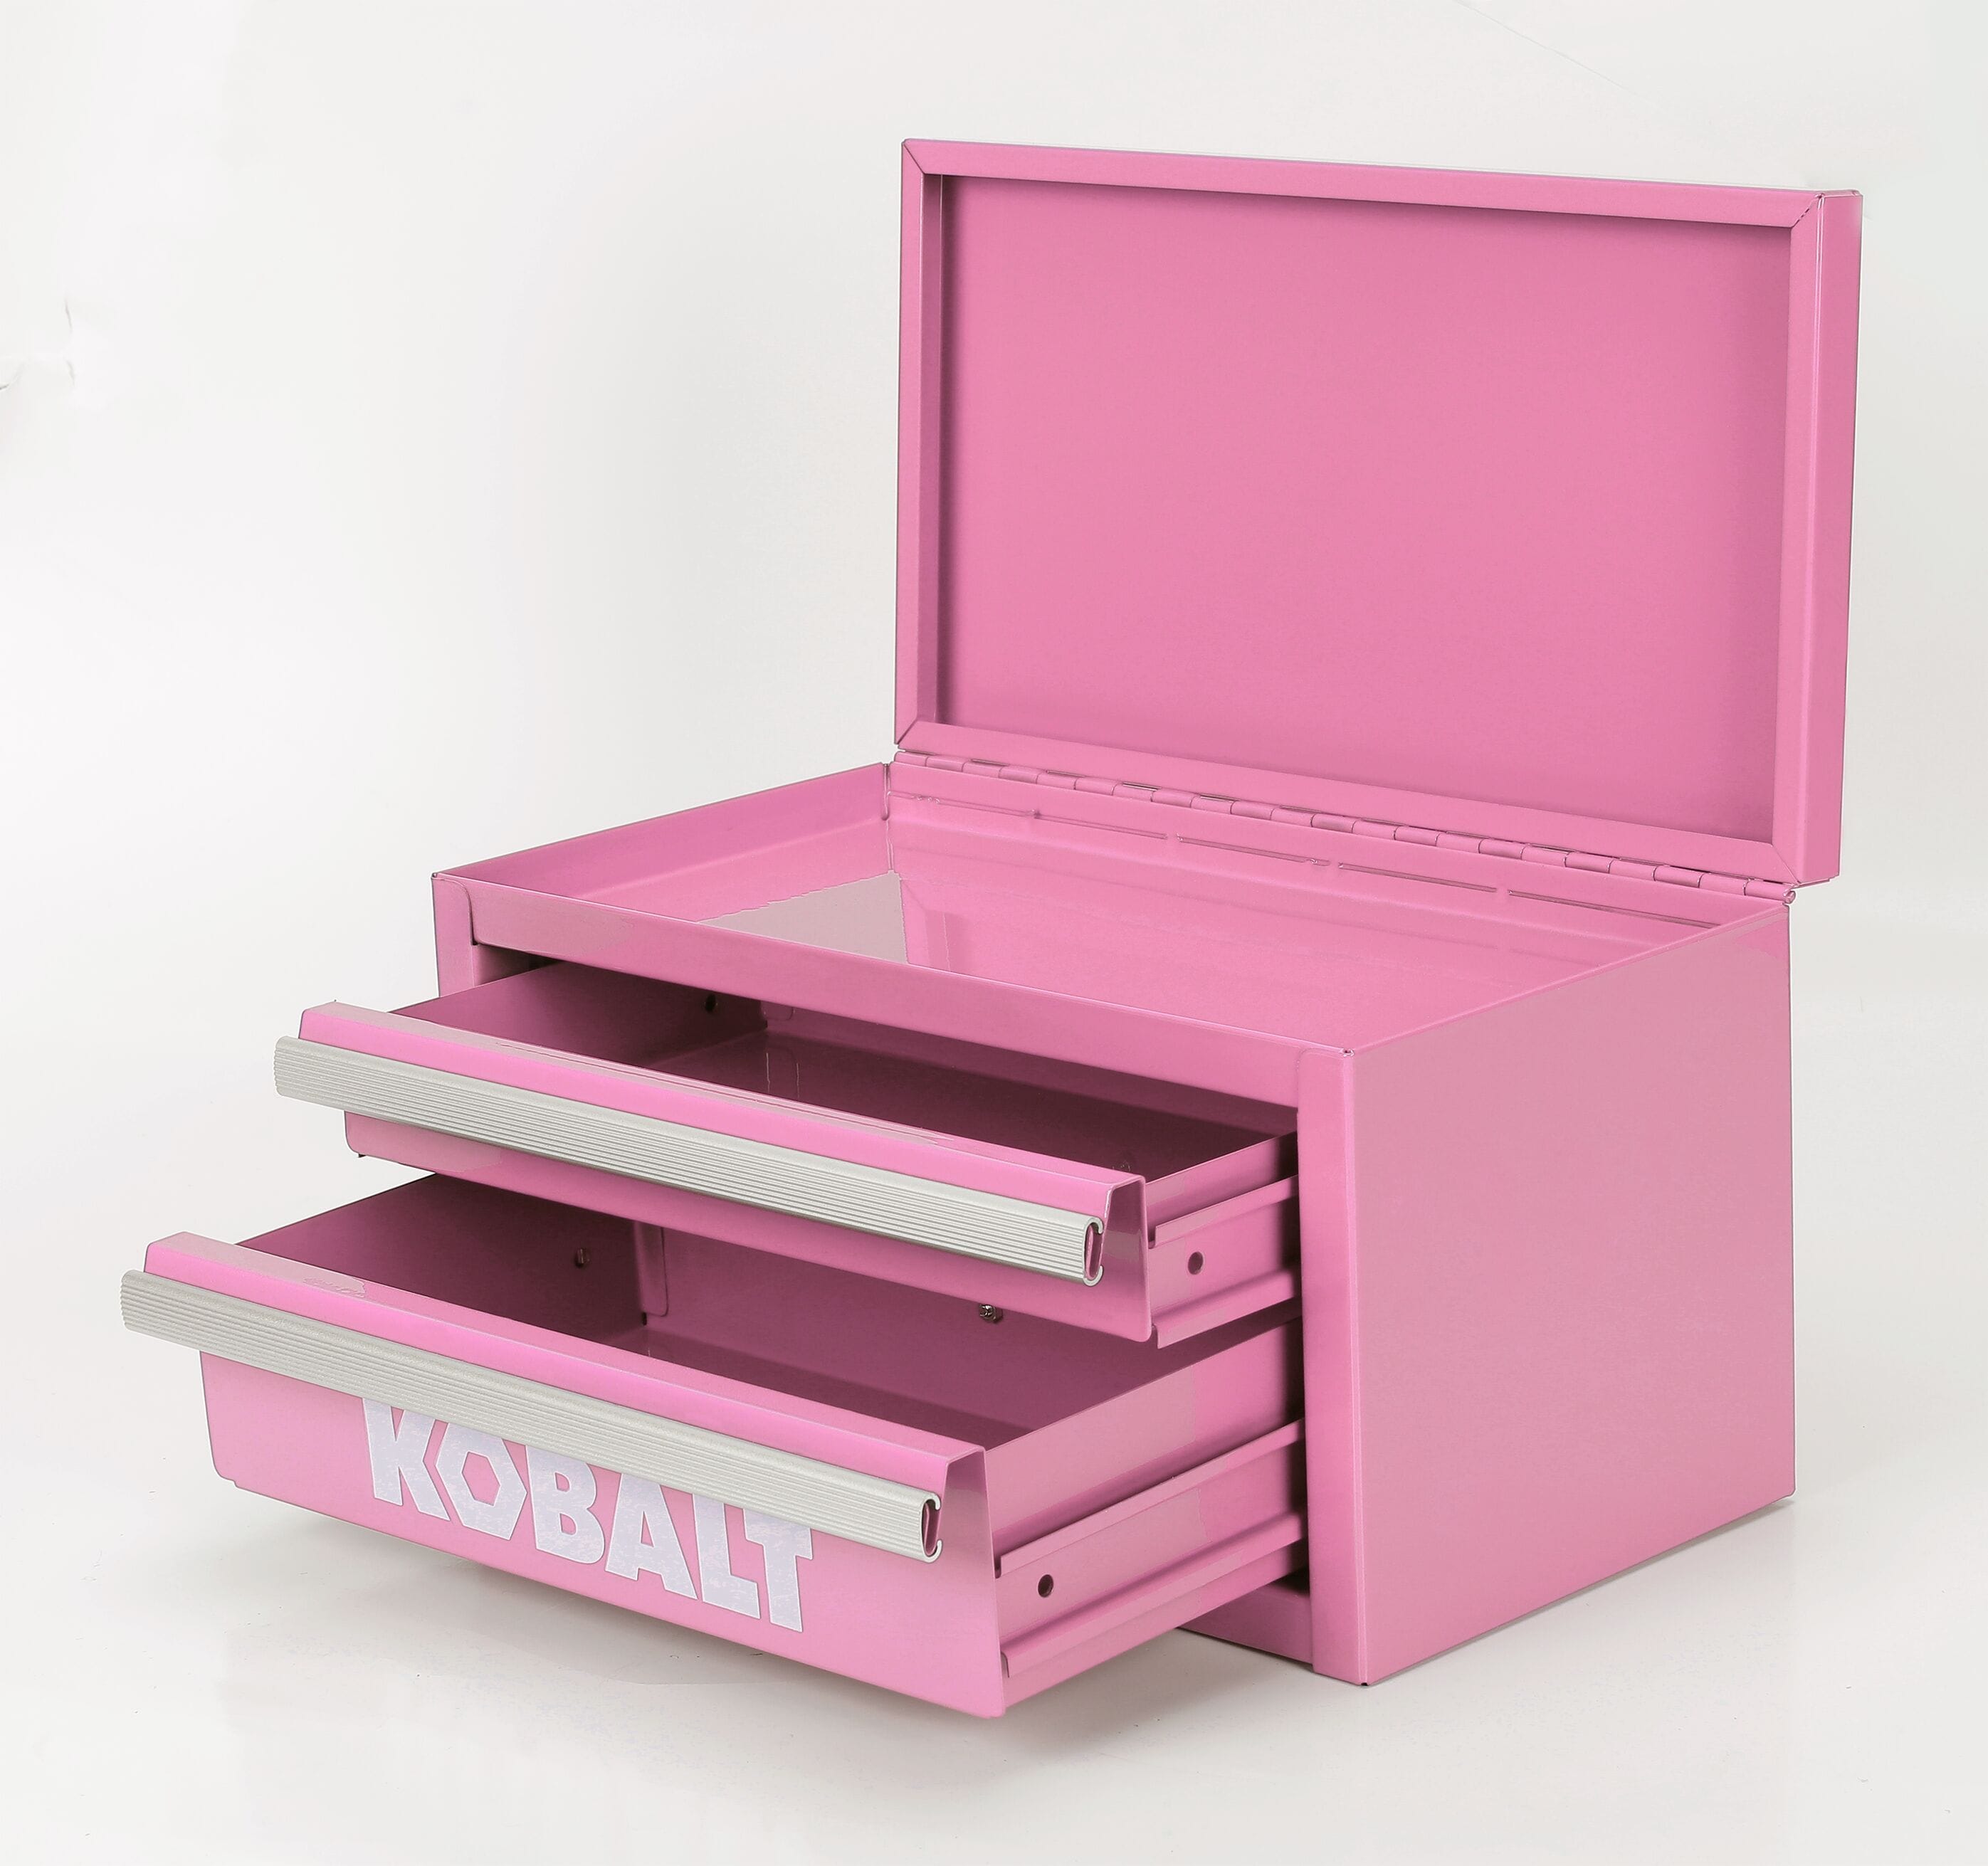 The Original Pink Box 12-Compartment Plastic Small Parts Organizer